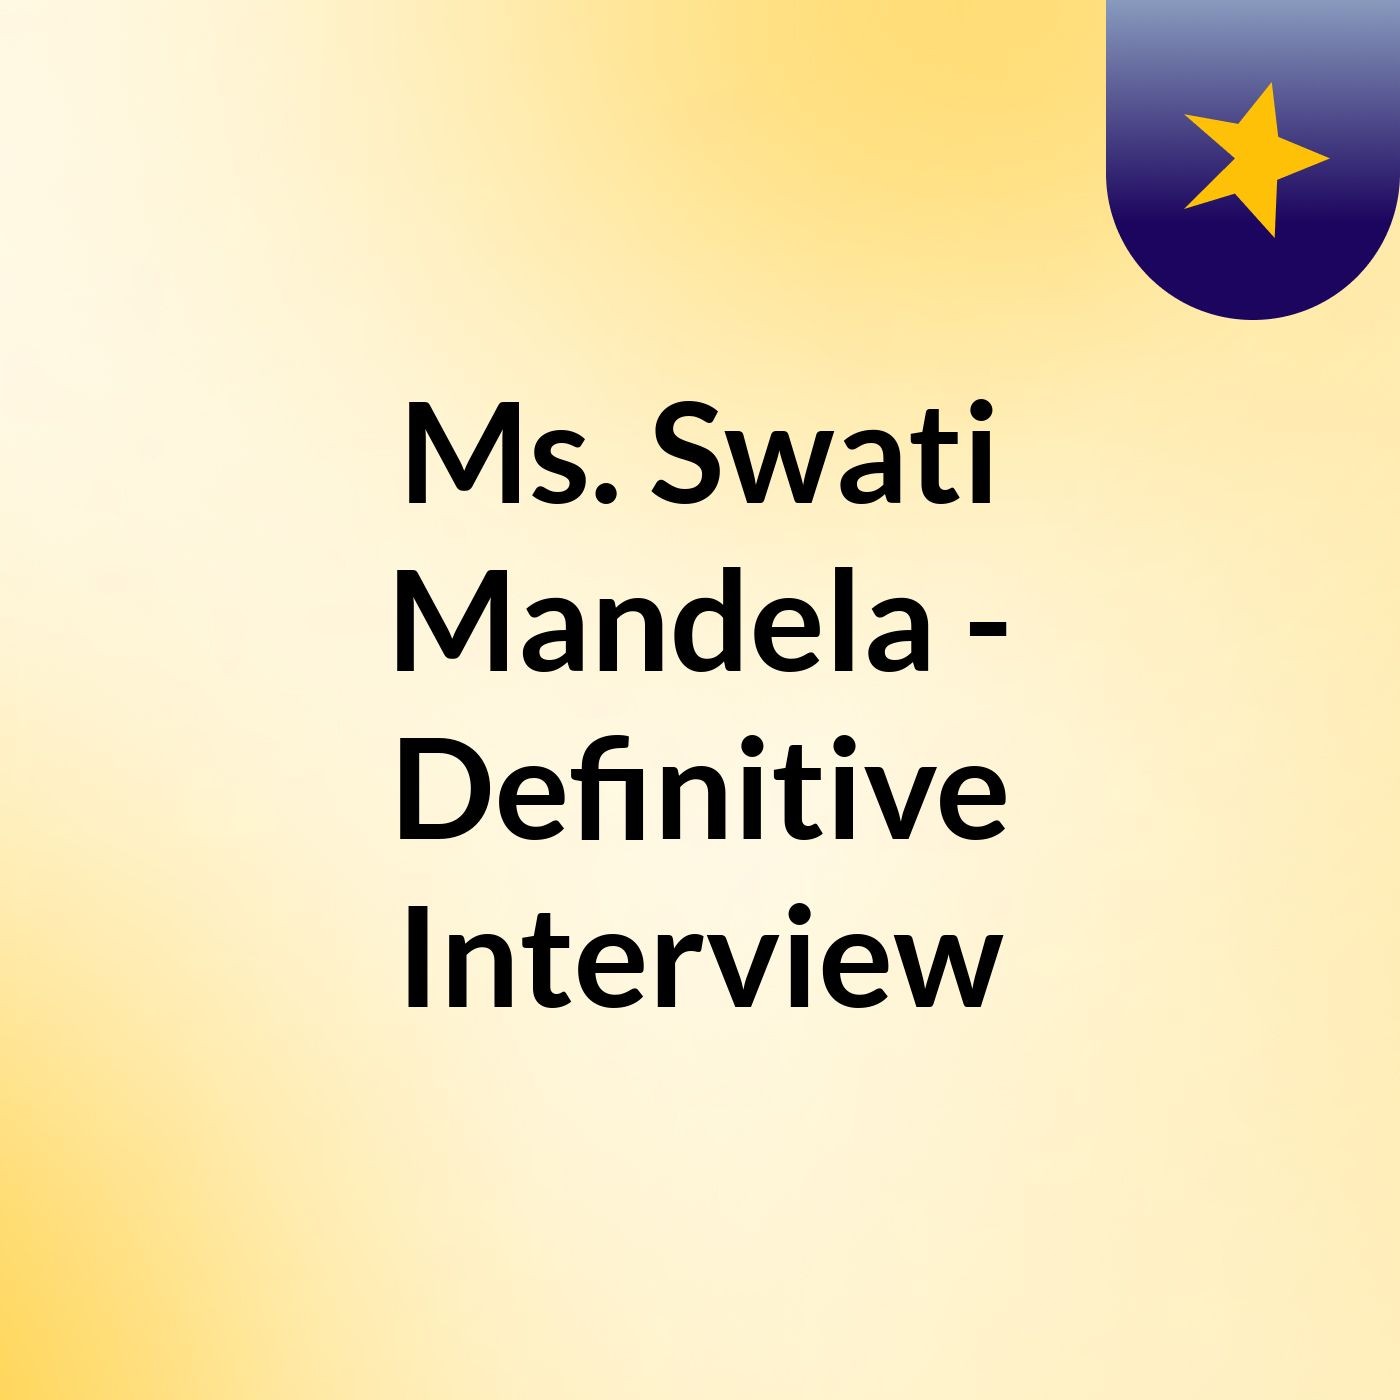 Ms. Swati Mandela - Definitive Interview